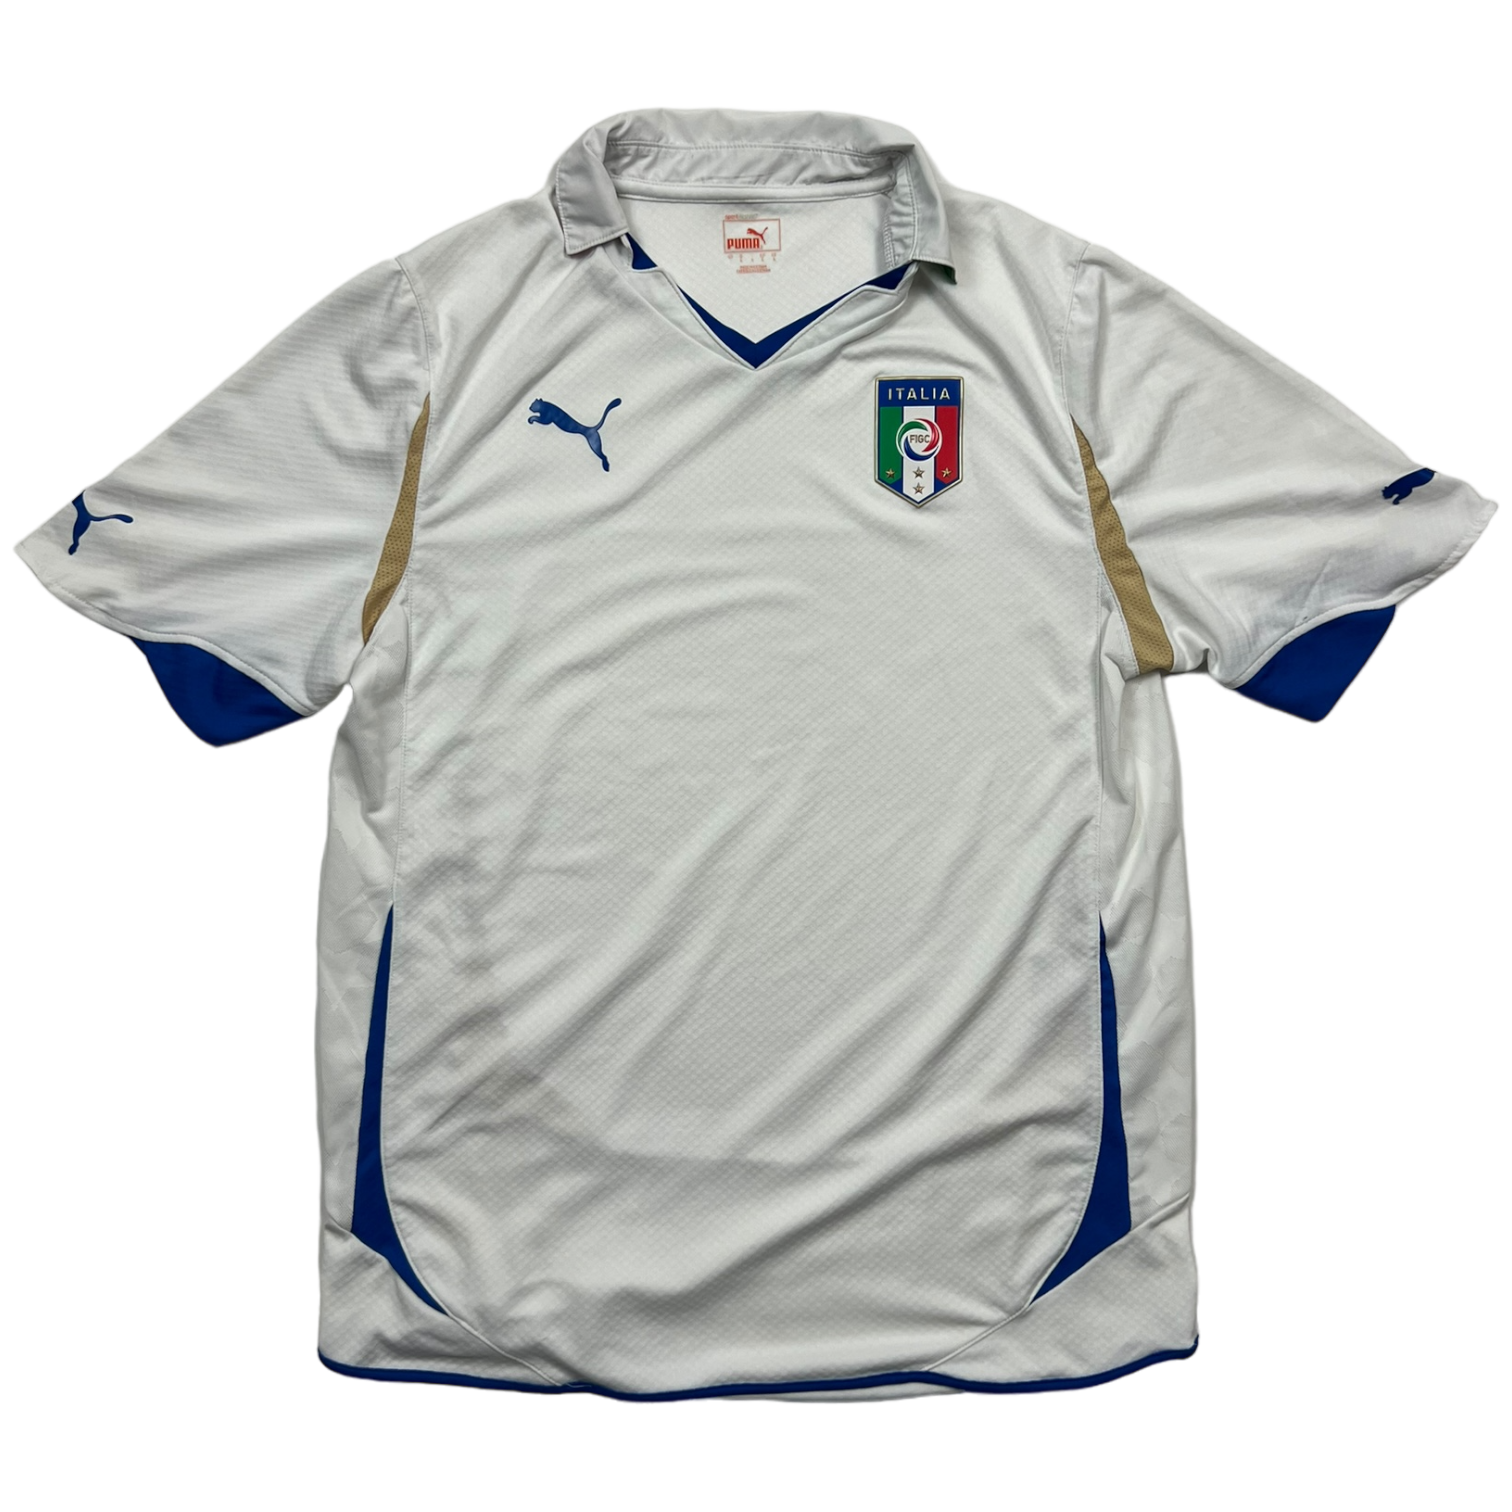 Puma Italy Jersey (L)